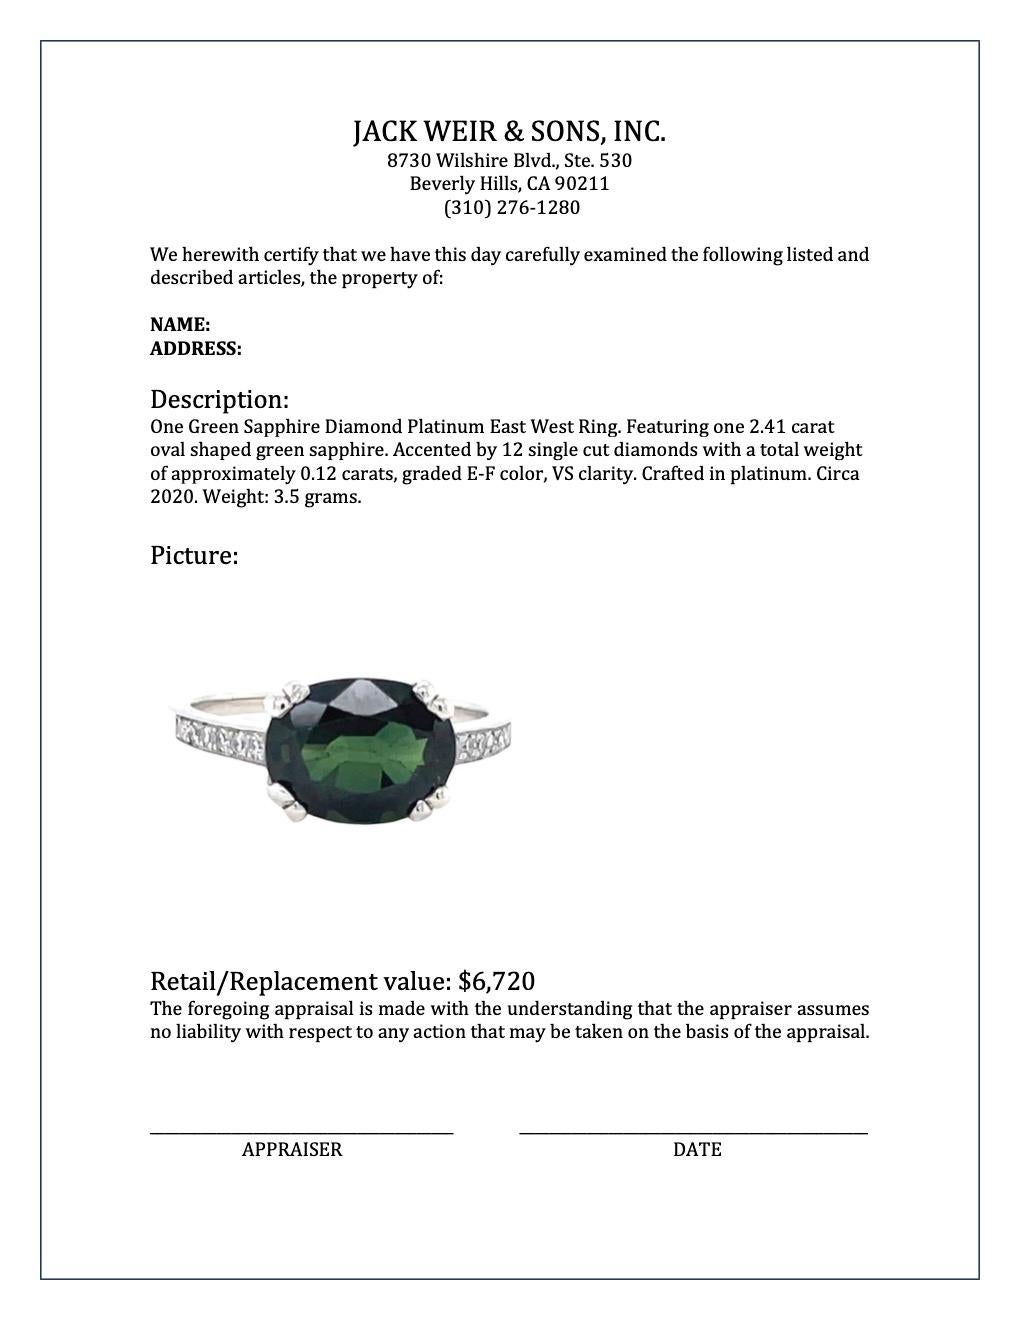 2.41 Carat Green Sapphire Diamond Platinum East West Ring 1